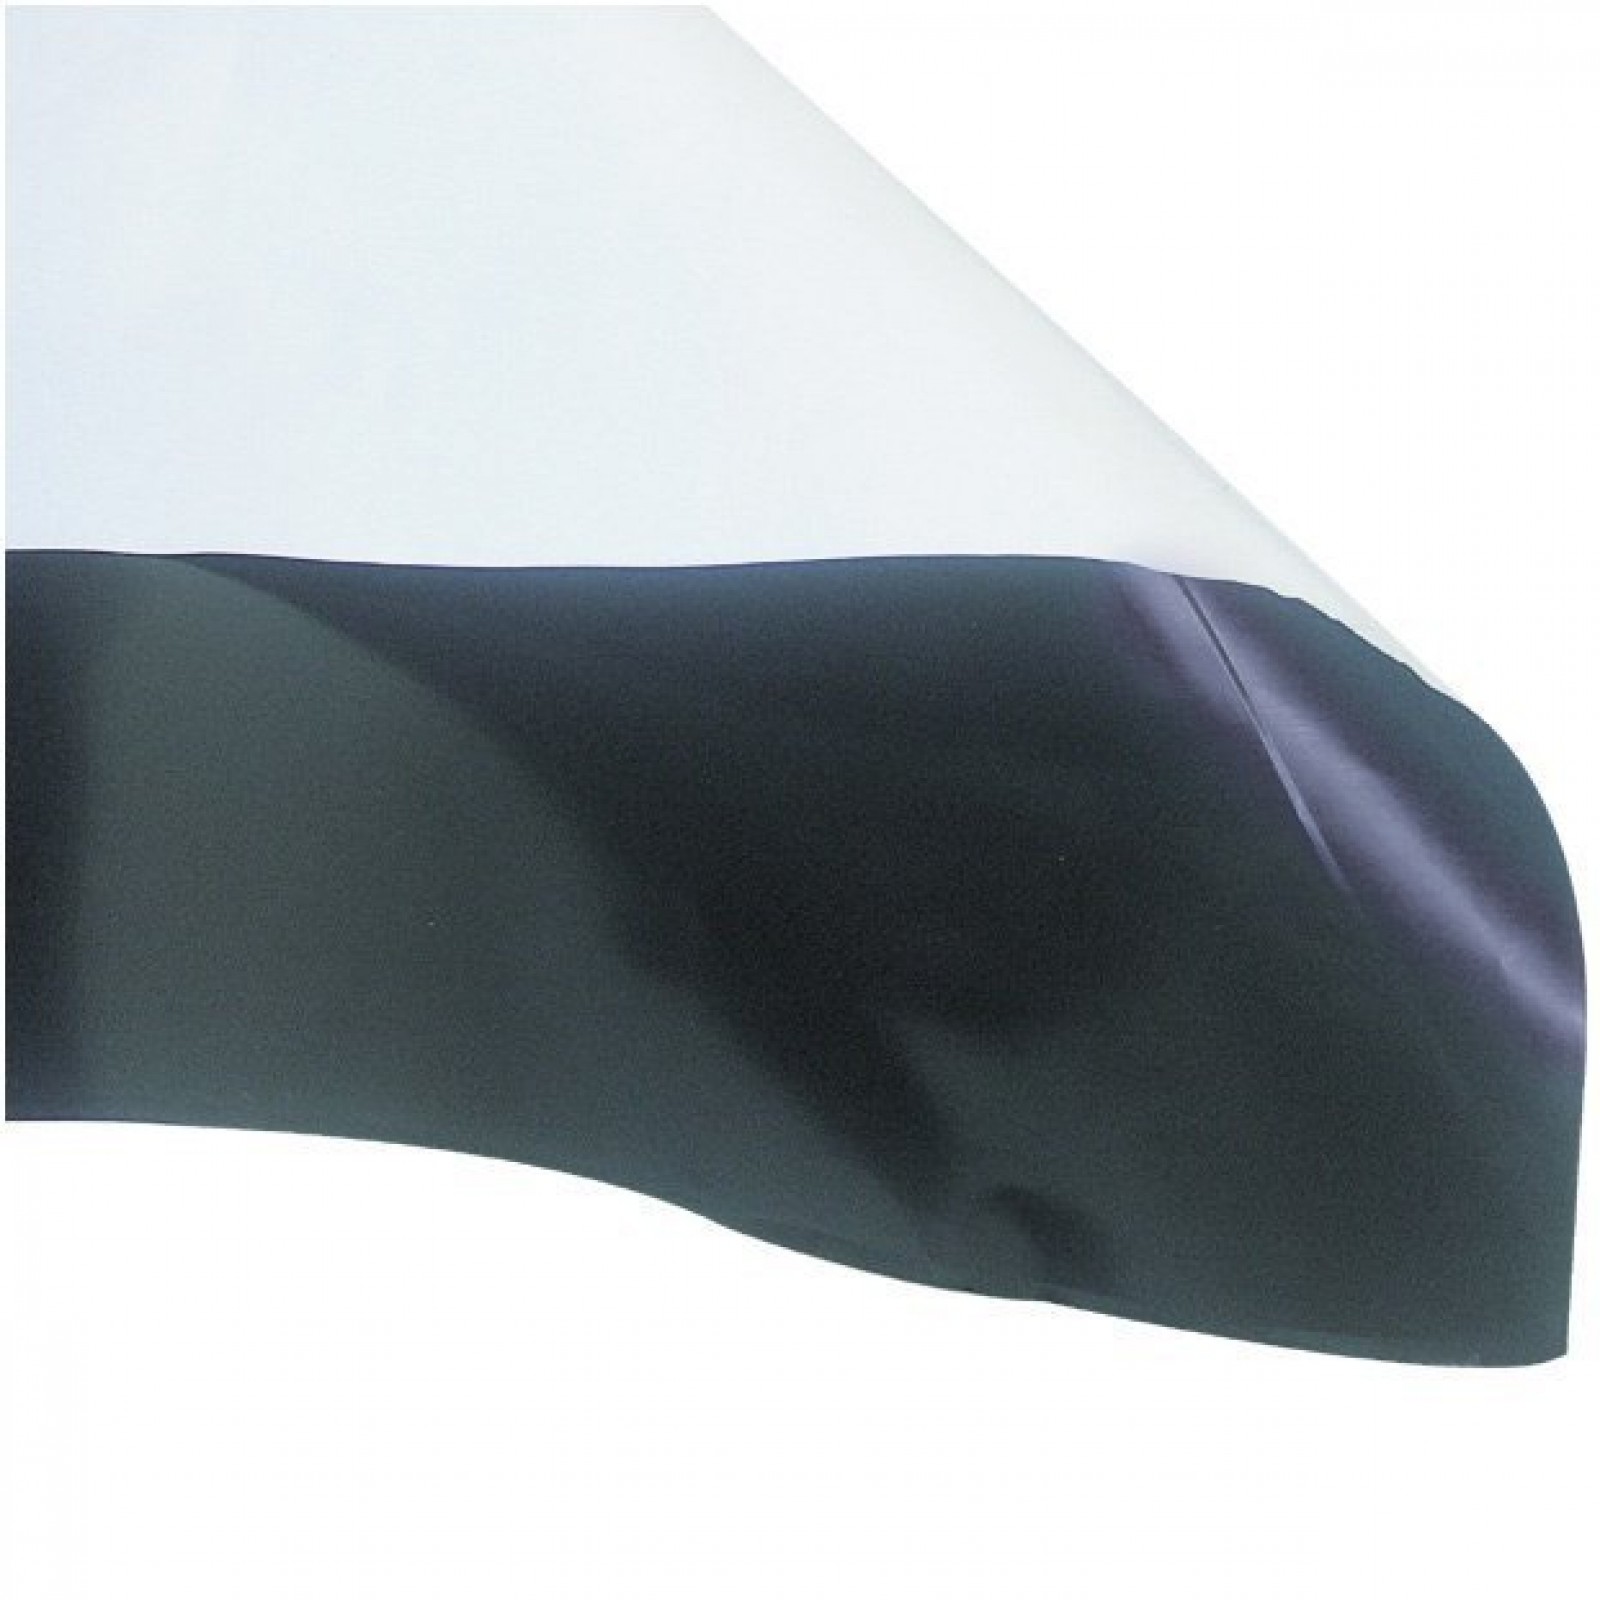 groflective Folie, Schwarz-Weiß, 1 m x 2 m 